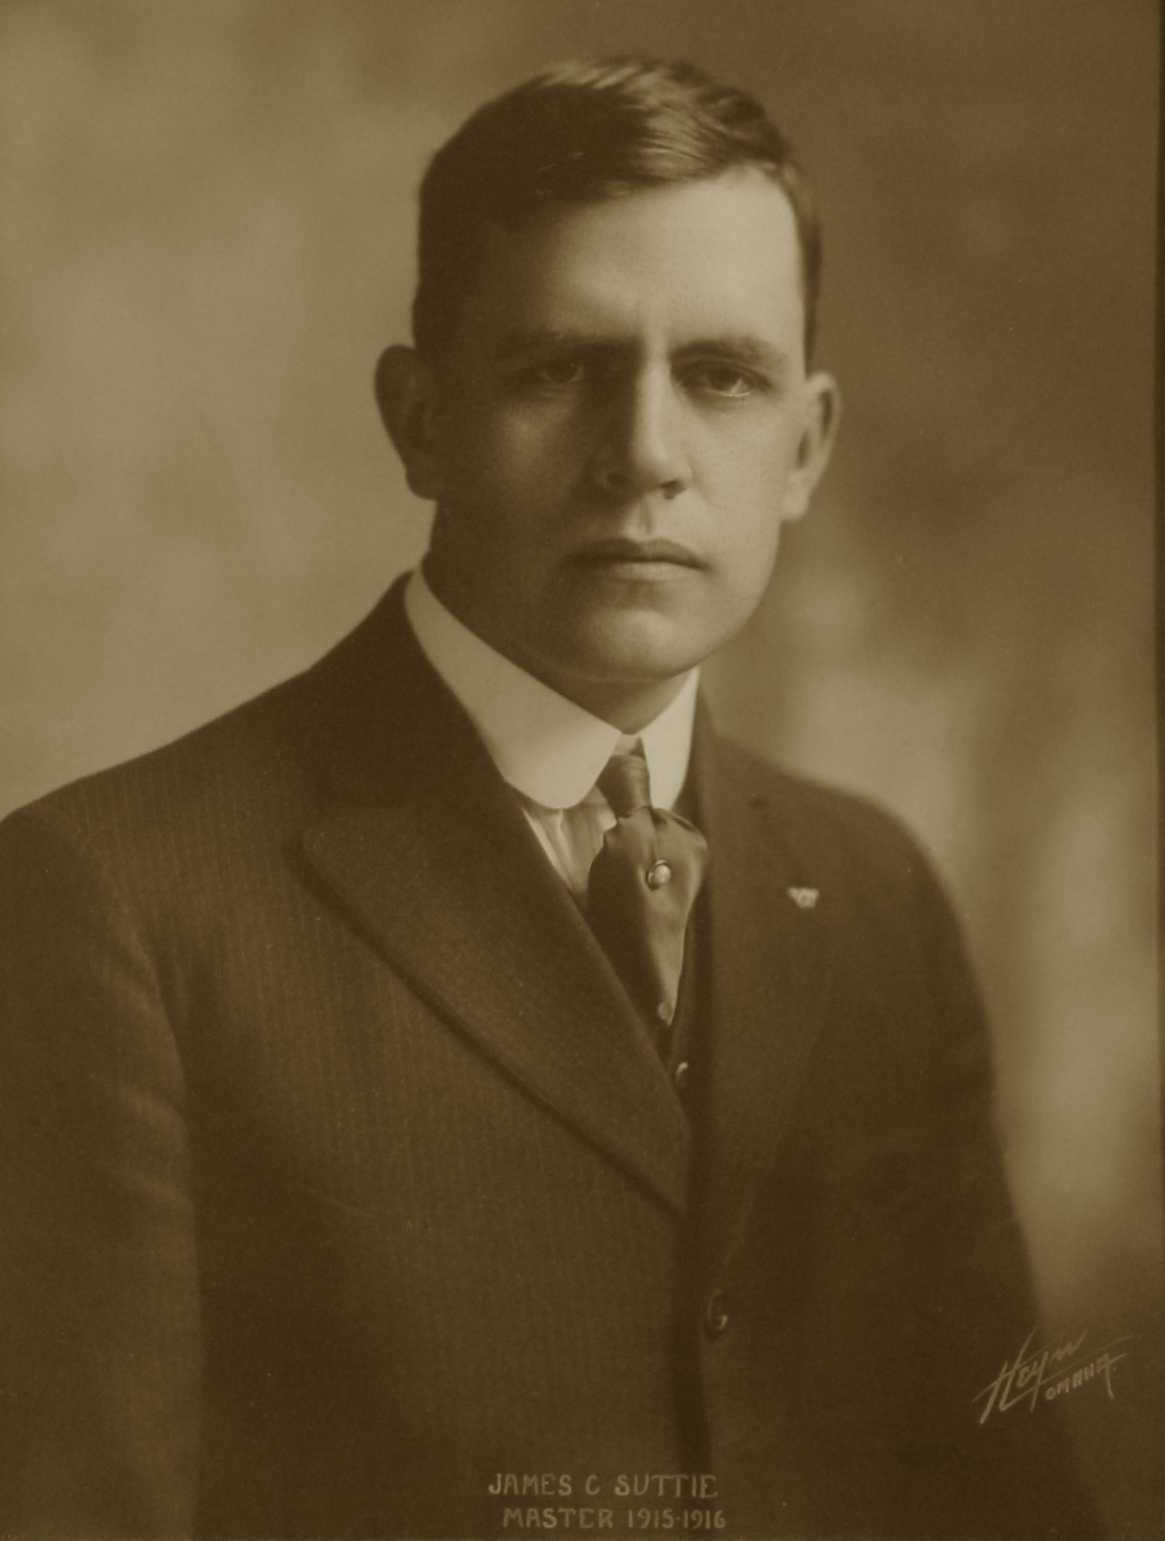 James C. Suttie, 1915-1916